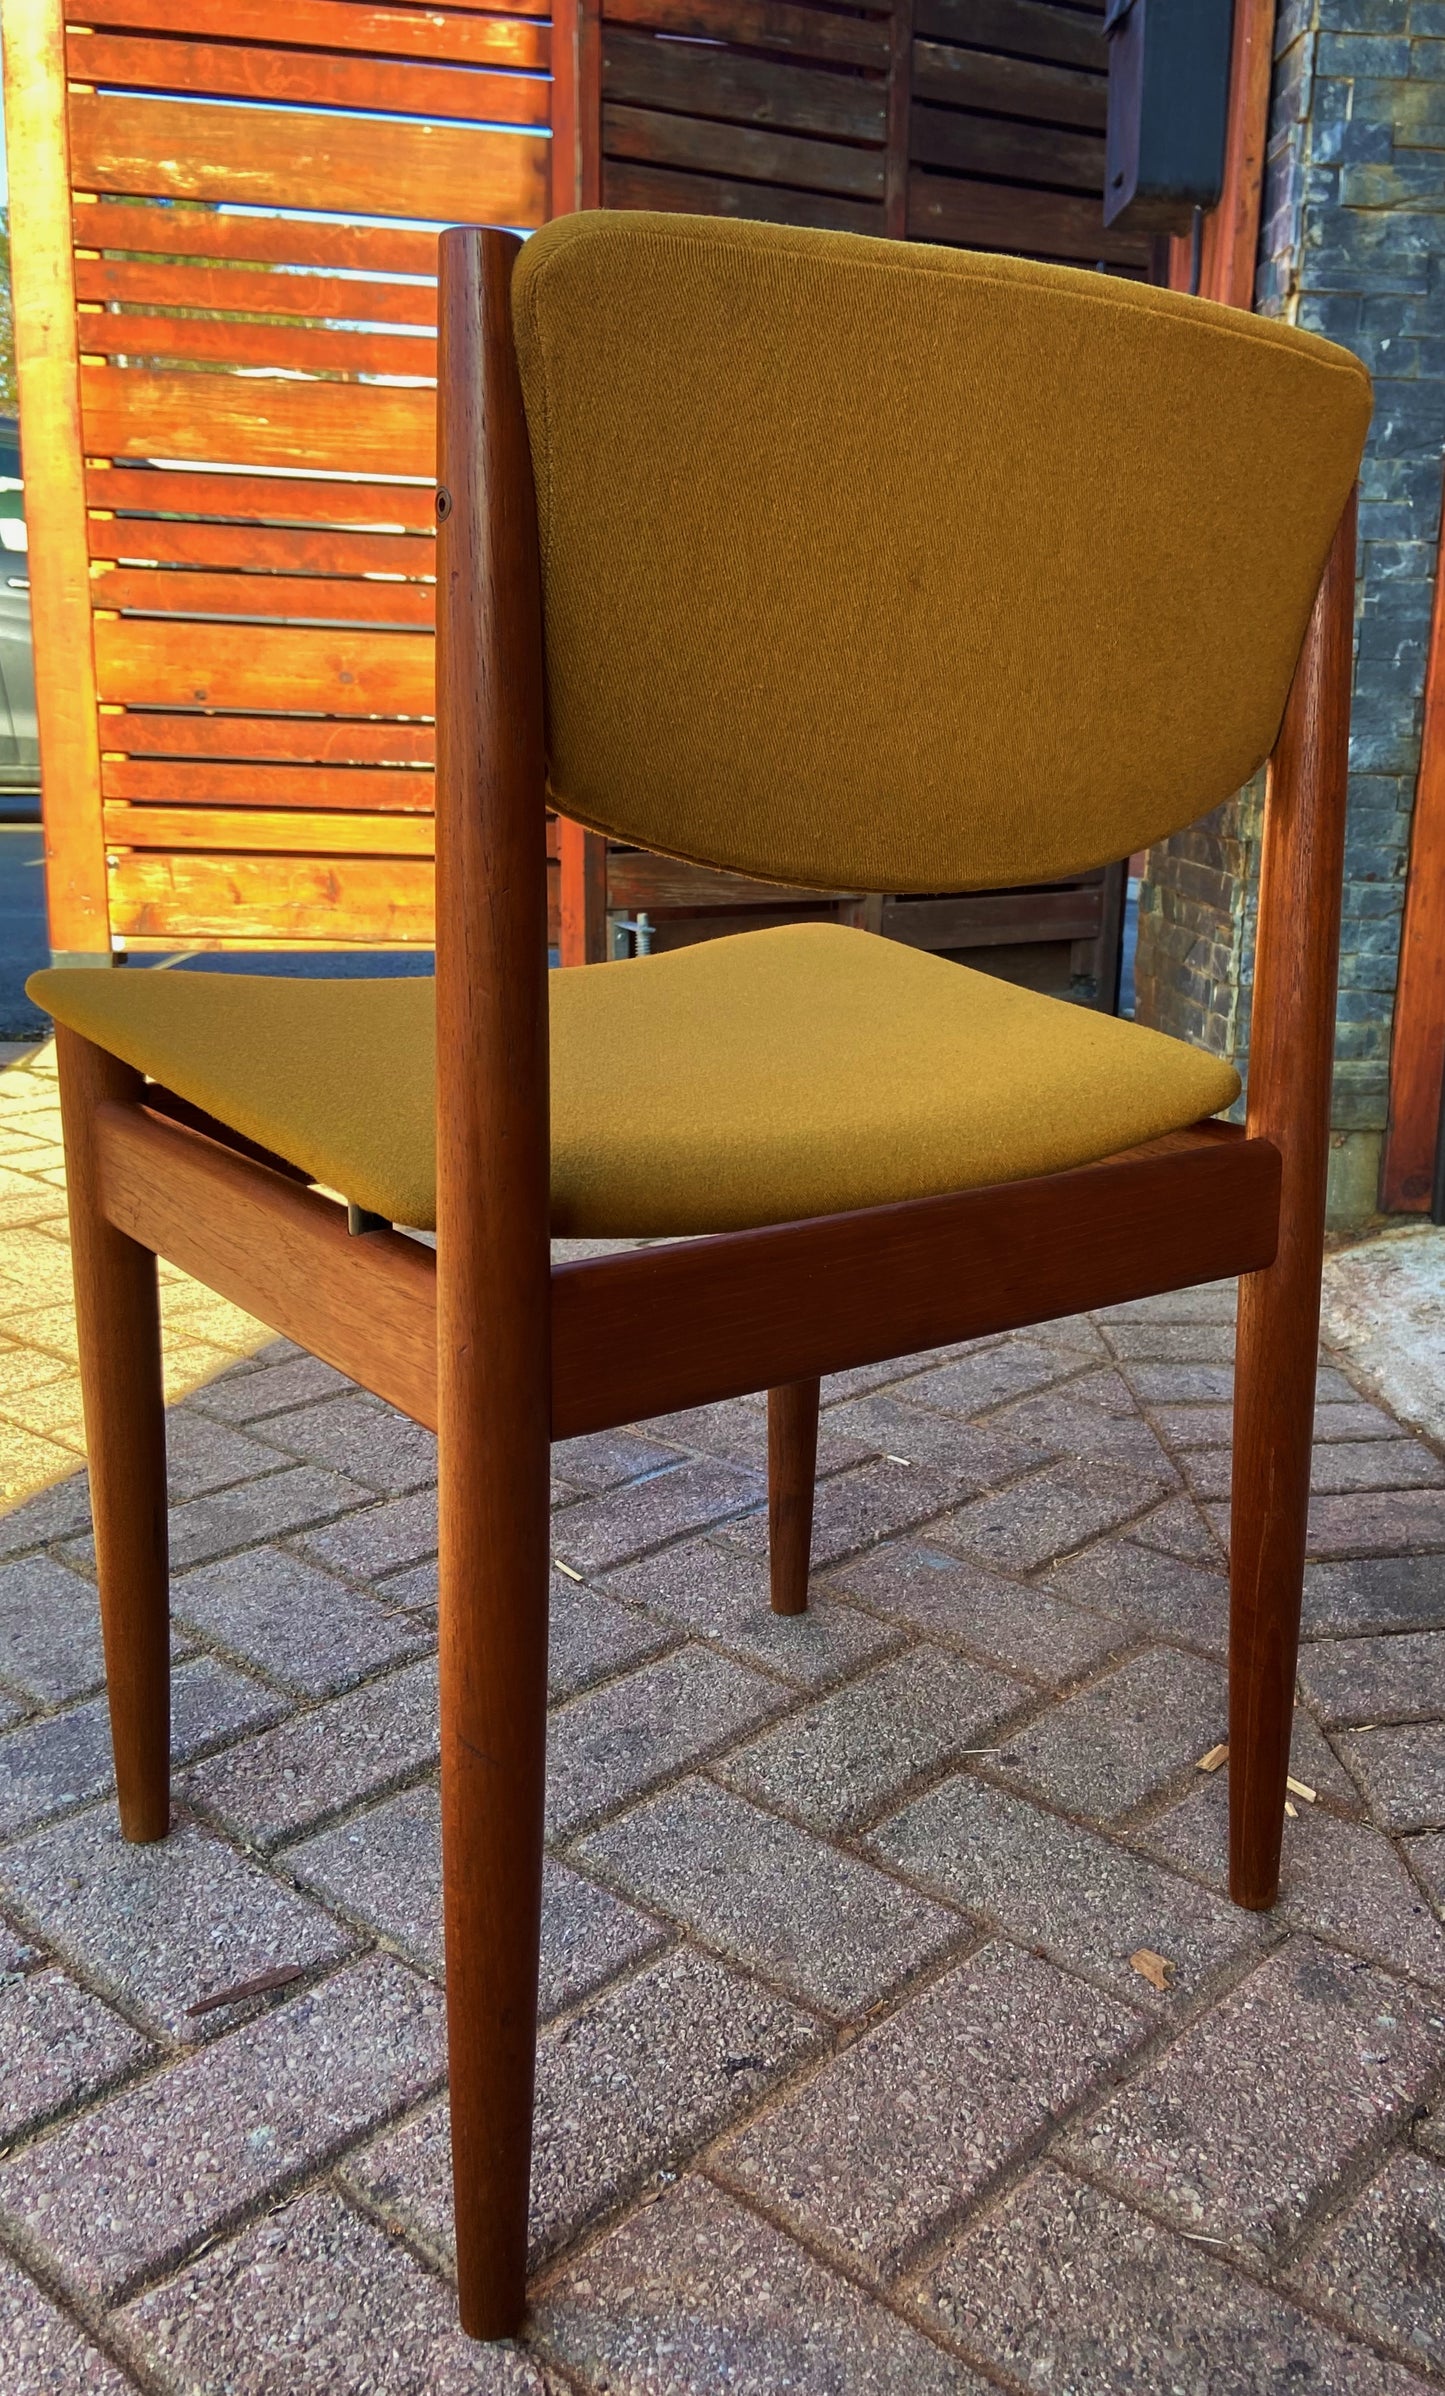 REFINISHED Danish Mid-Century Modern Teak Chair by Finn Juhl